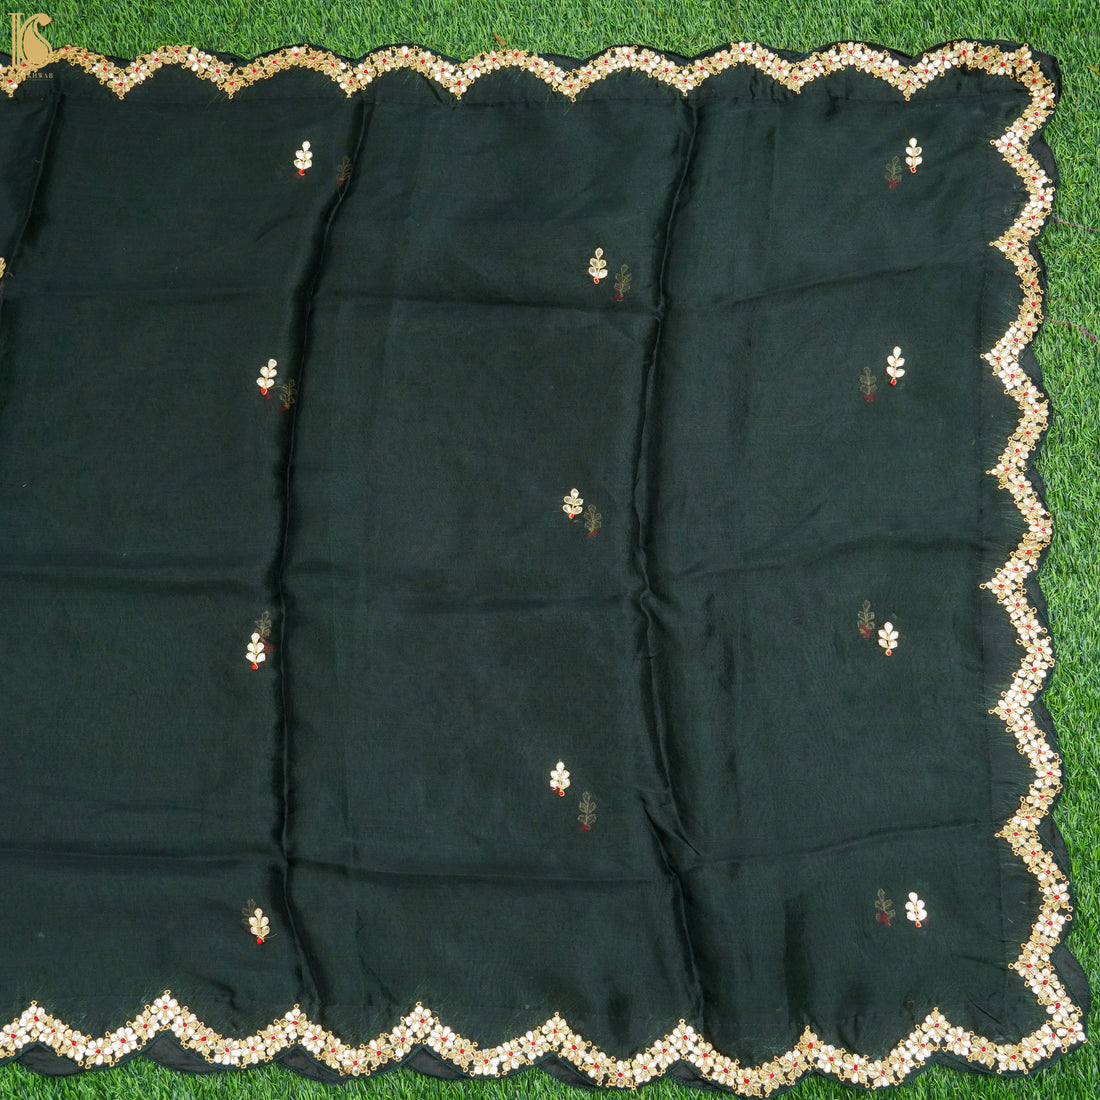 Spectra Green Pure Organza Silk Dupatta with Embroidery - Khinkhwab